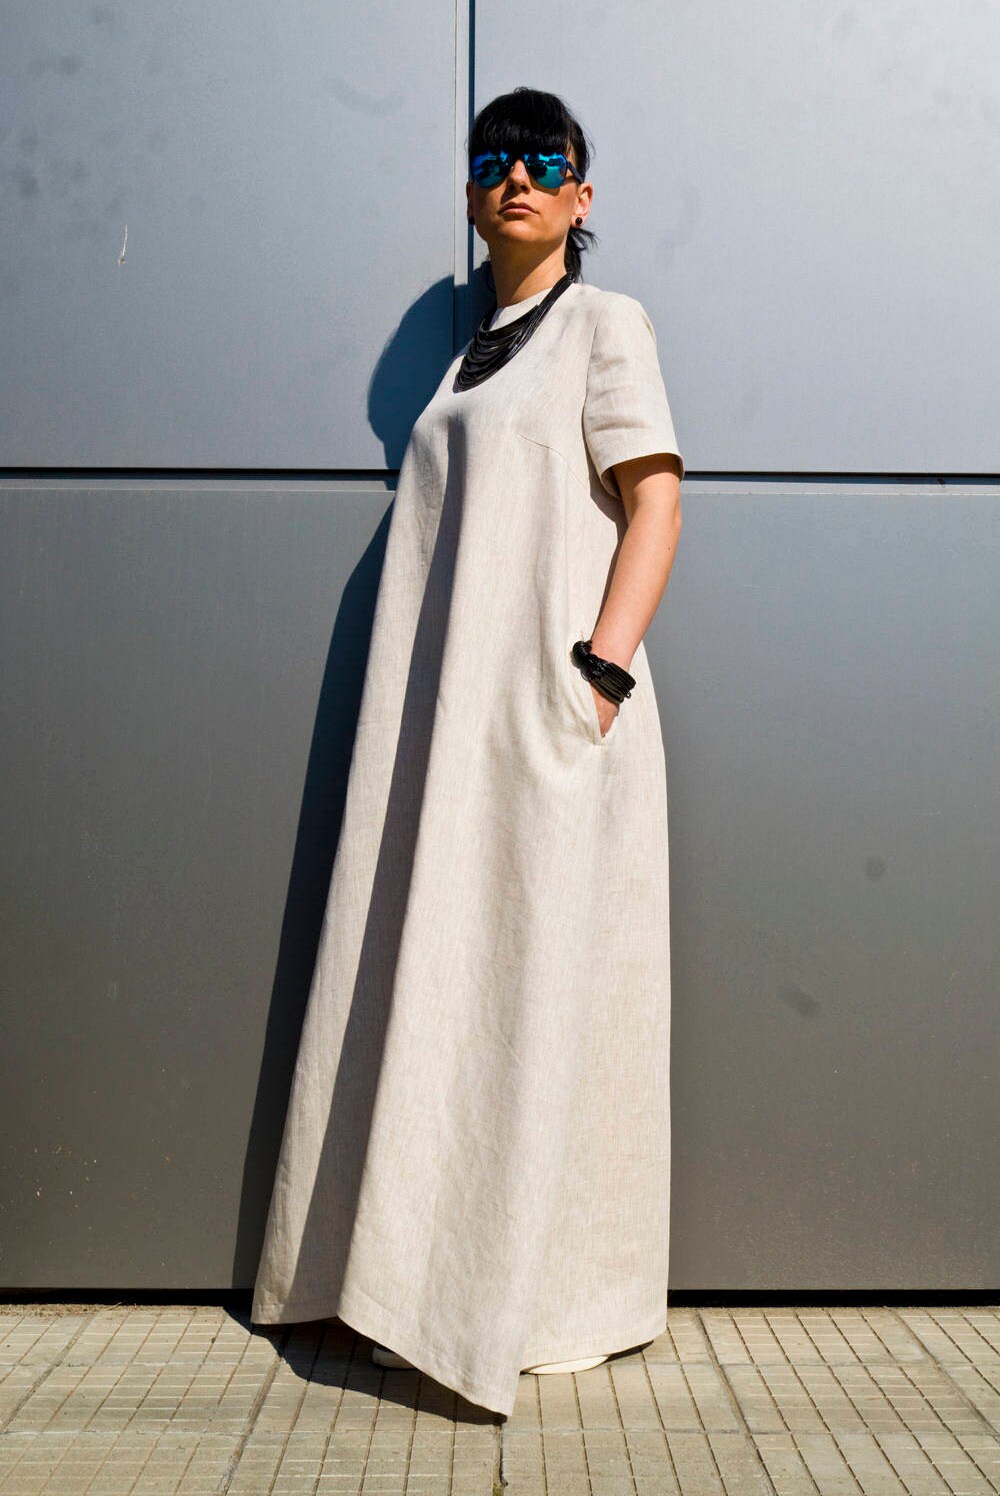 White Caftan Plus Size Maxi Dress New Long DressWomen/'s Clothing Oversized Loose Dress Kaftan Maxi Dress White Cotton Dress by YoLineXL